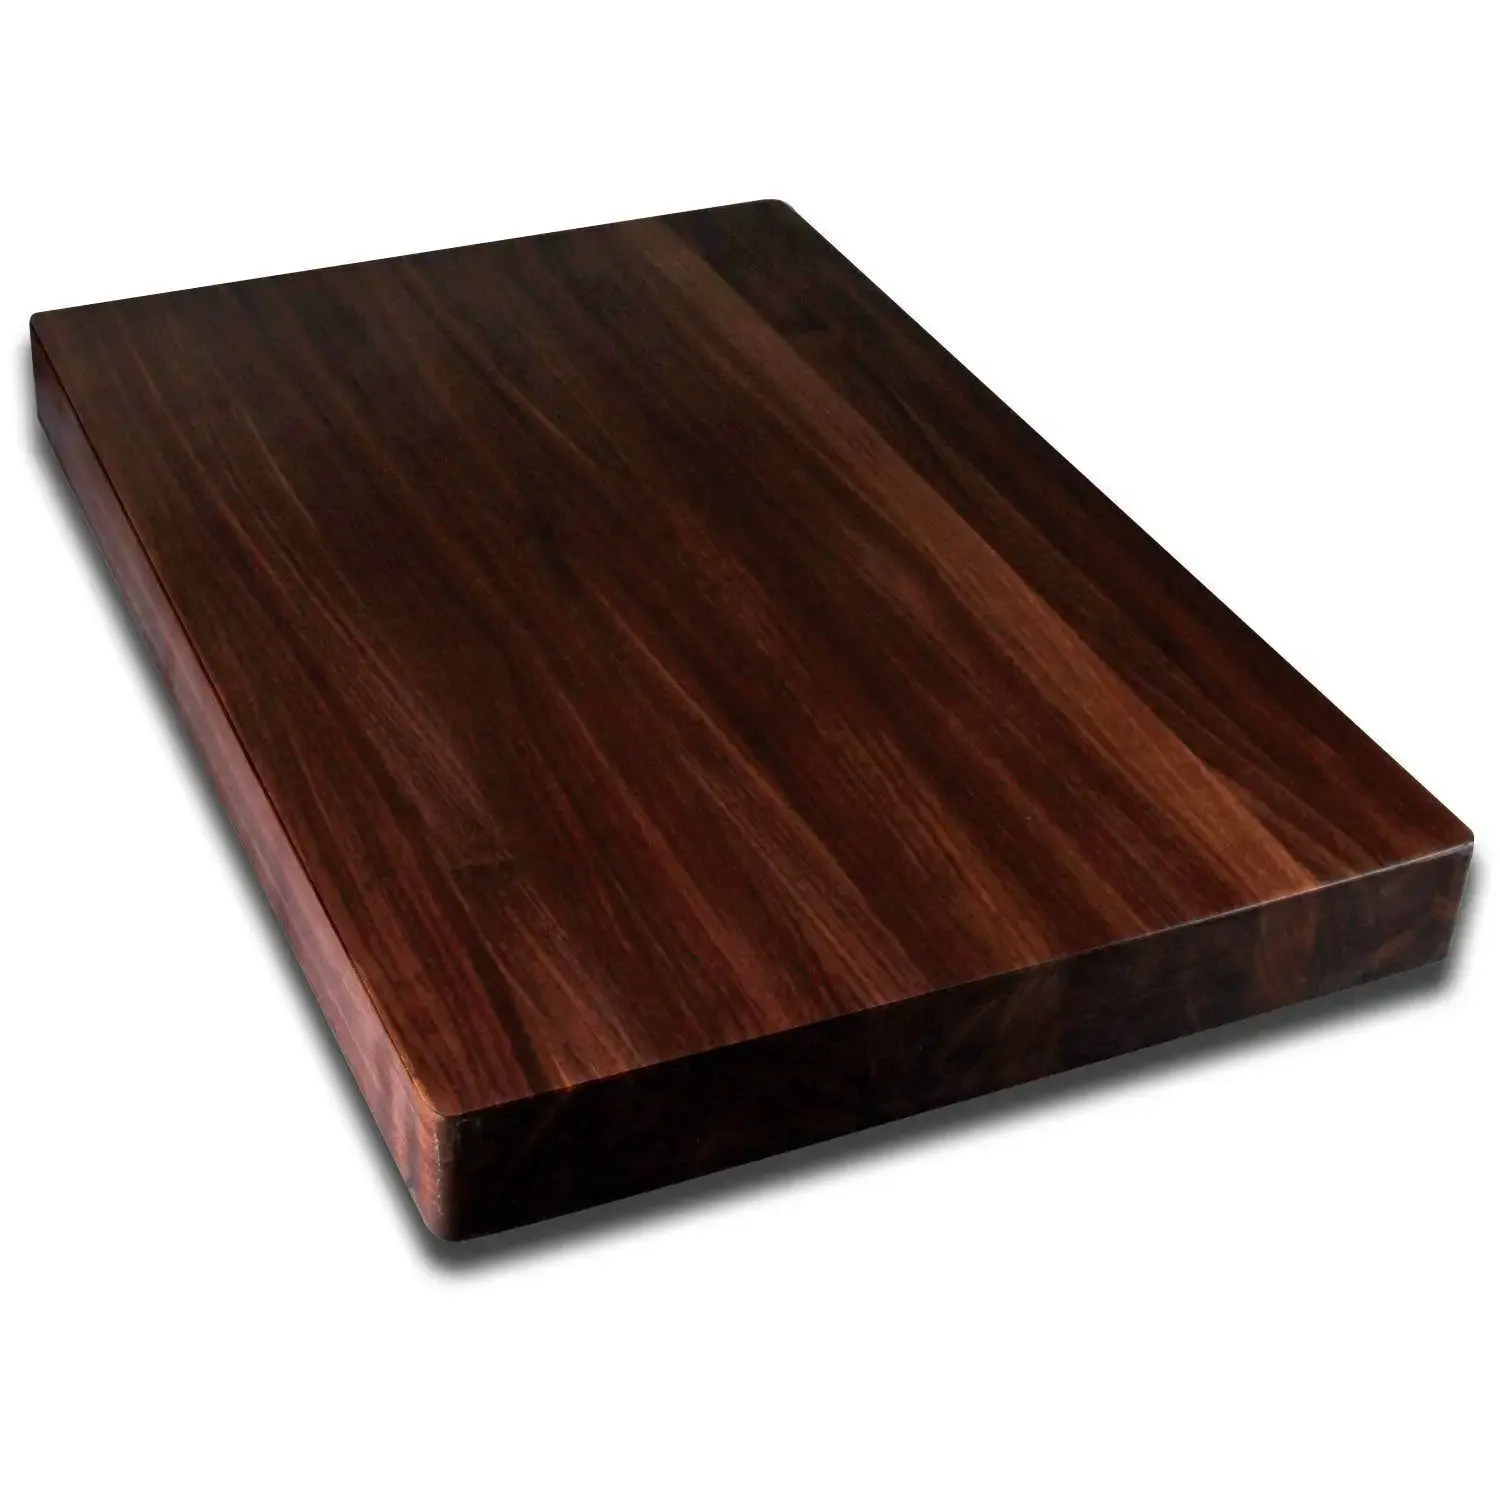 Capa transparente de manchas de aceite de madera de protección fuerte para muebles de madera pintura de acabado mate de madera